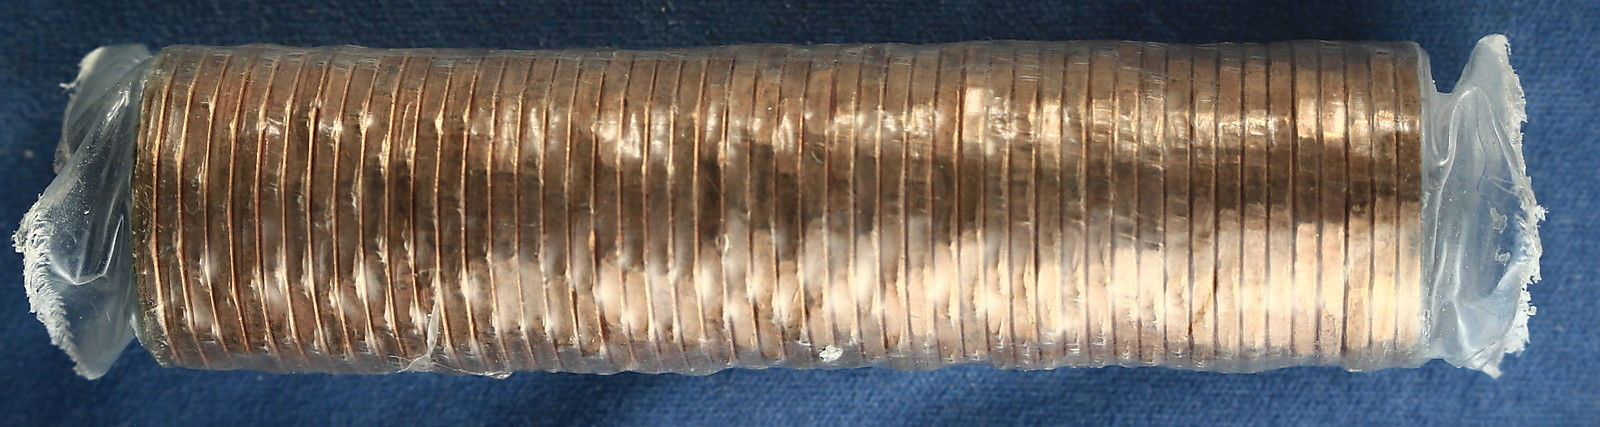 Canada 1992 Original Mint Roll of Pennies   1